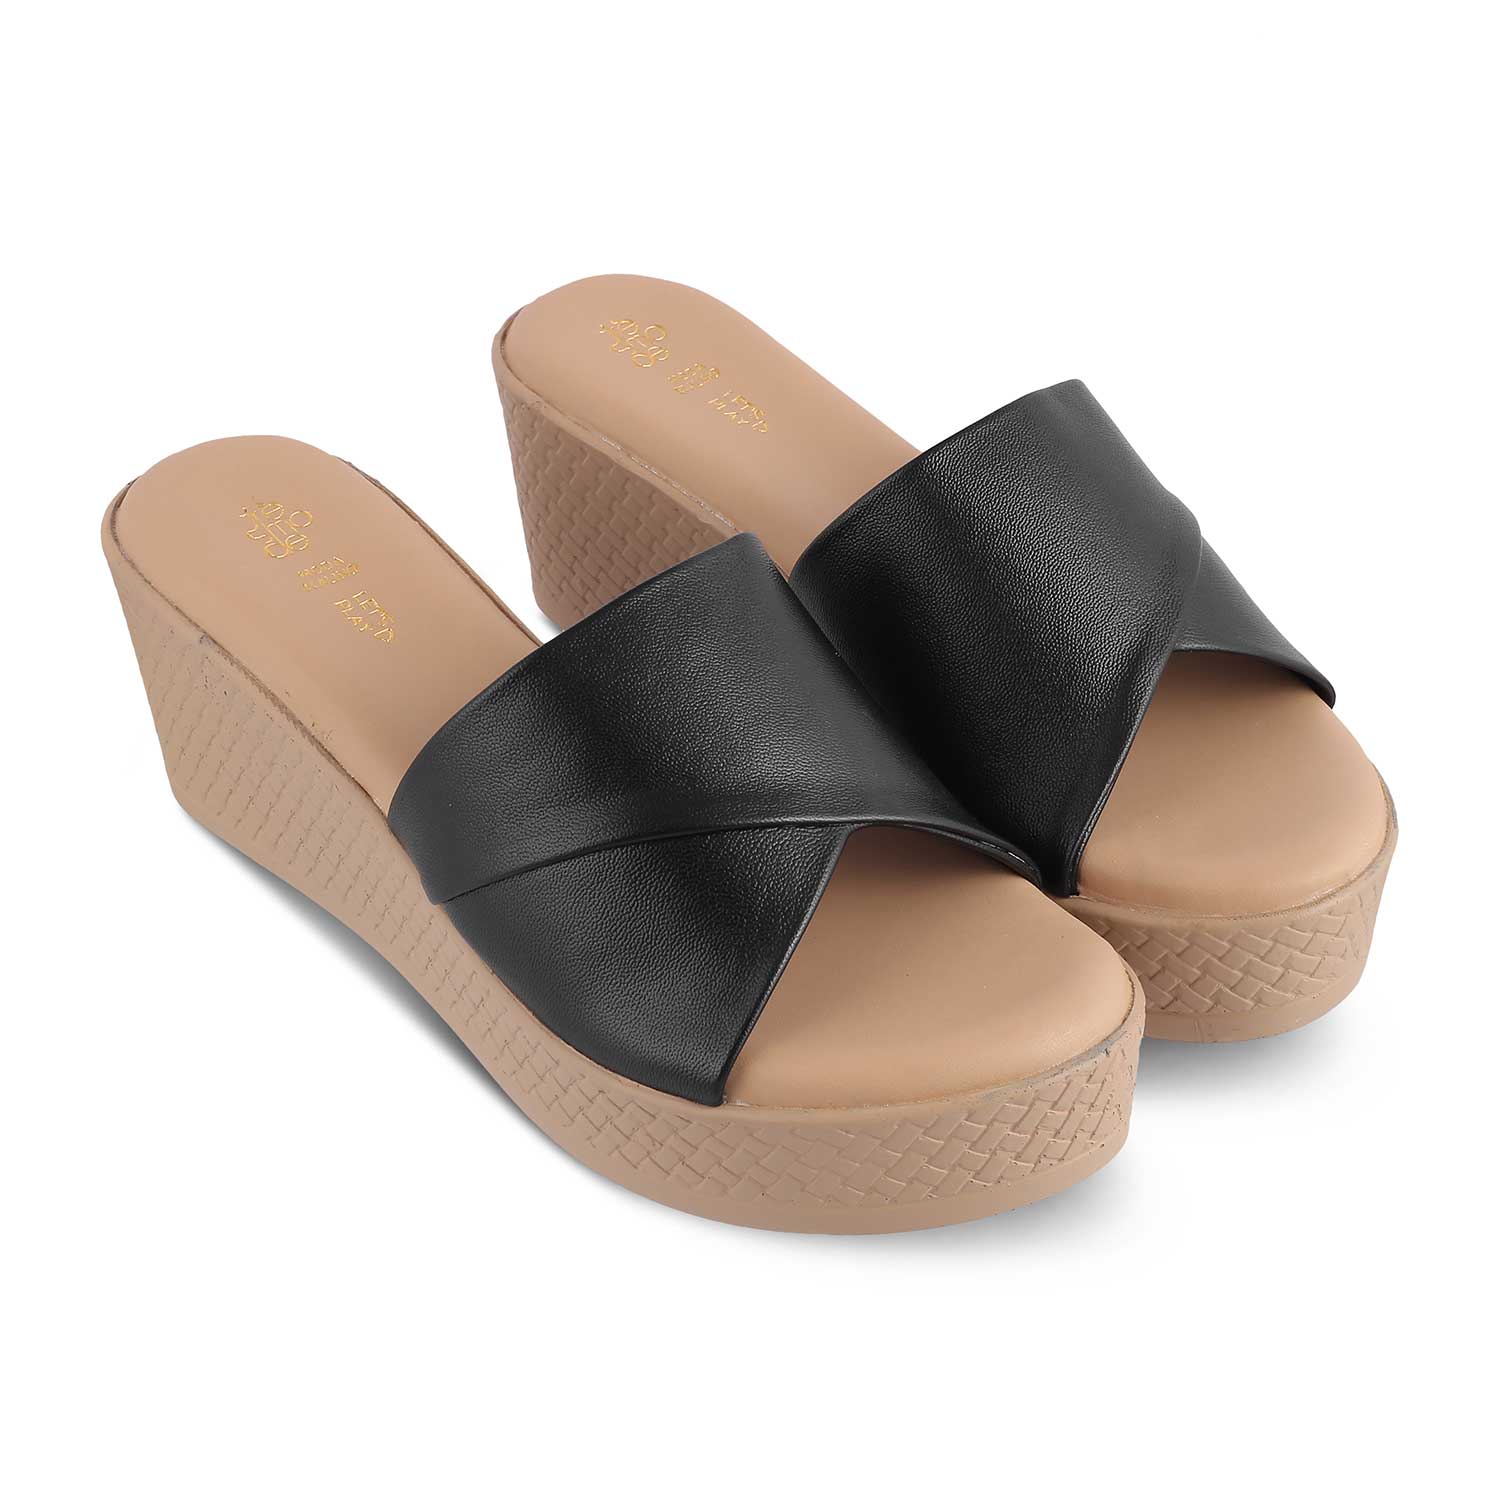 The Sedge Black Women's Casual Wedge Sandals Tresmode